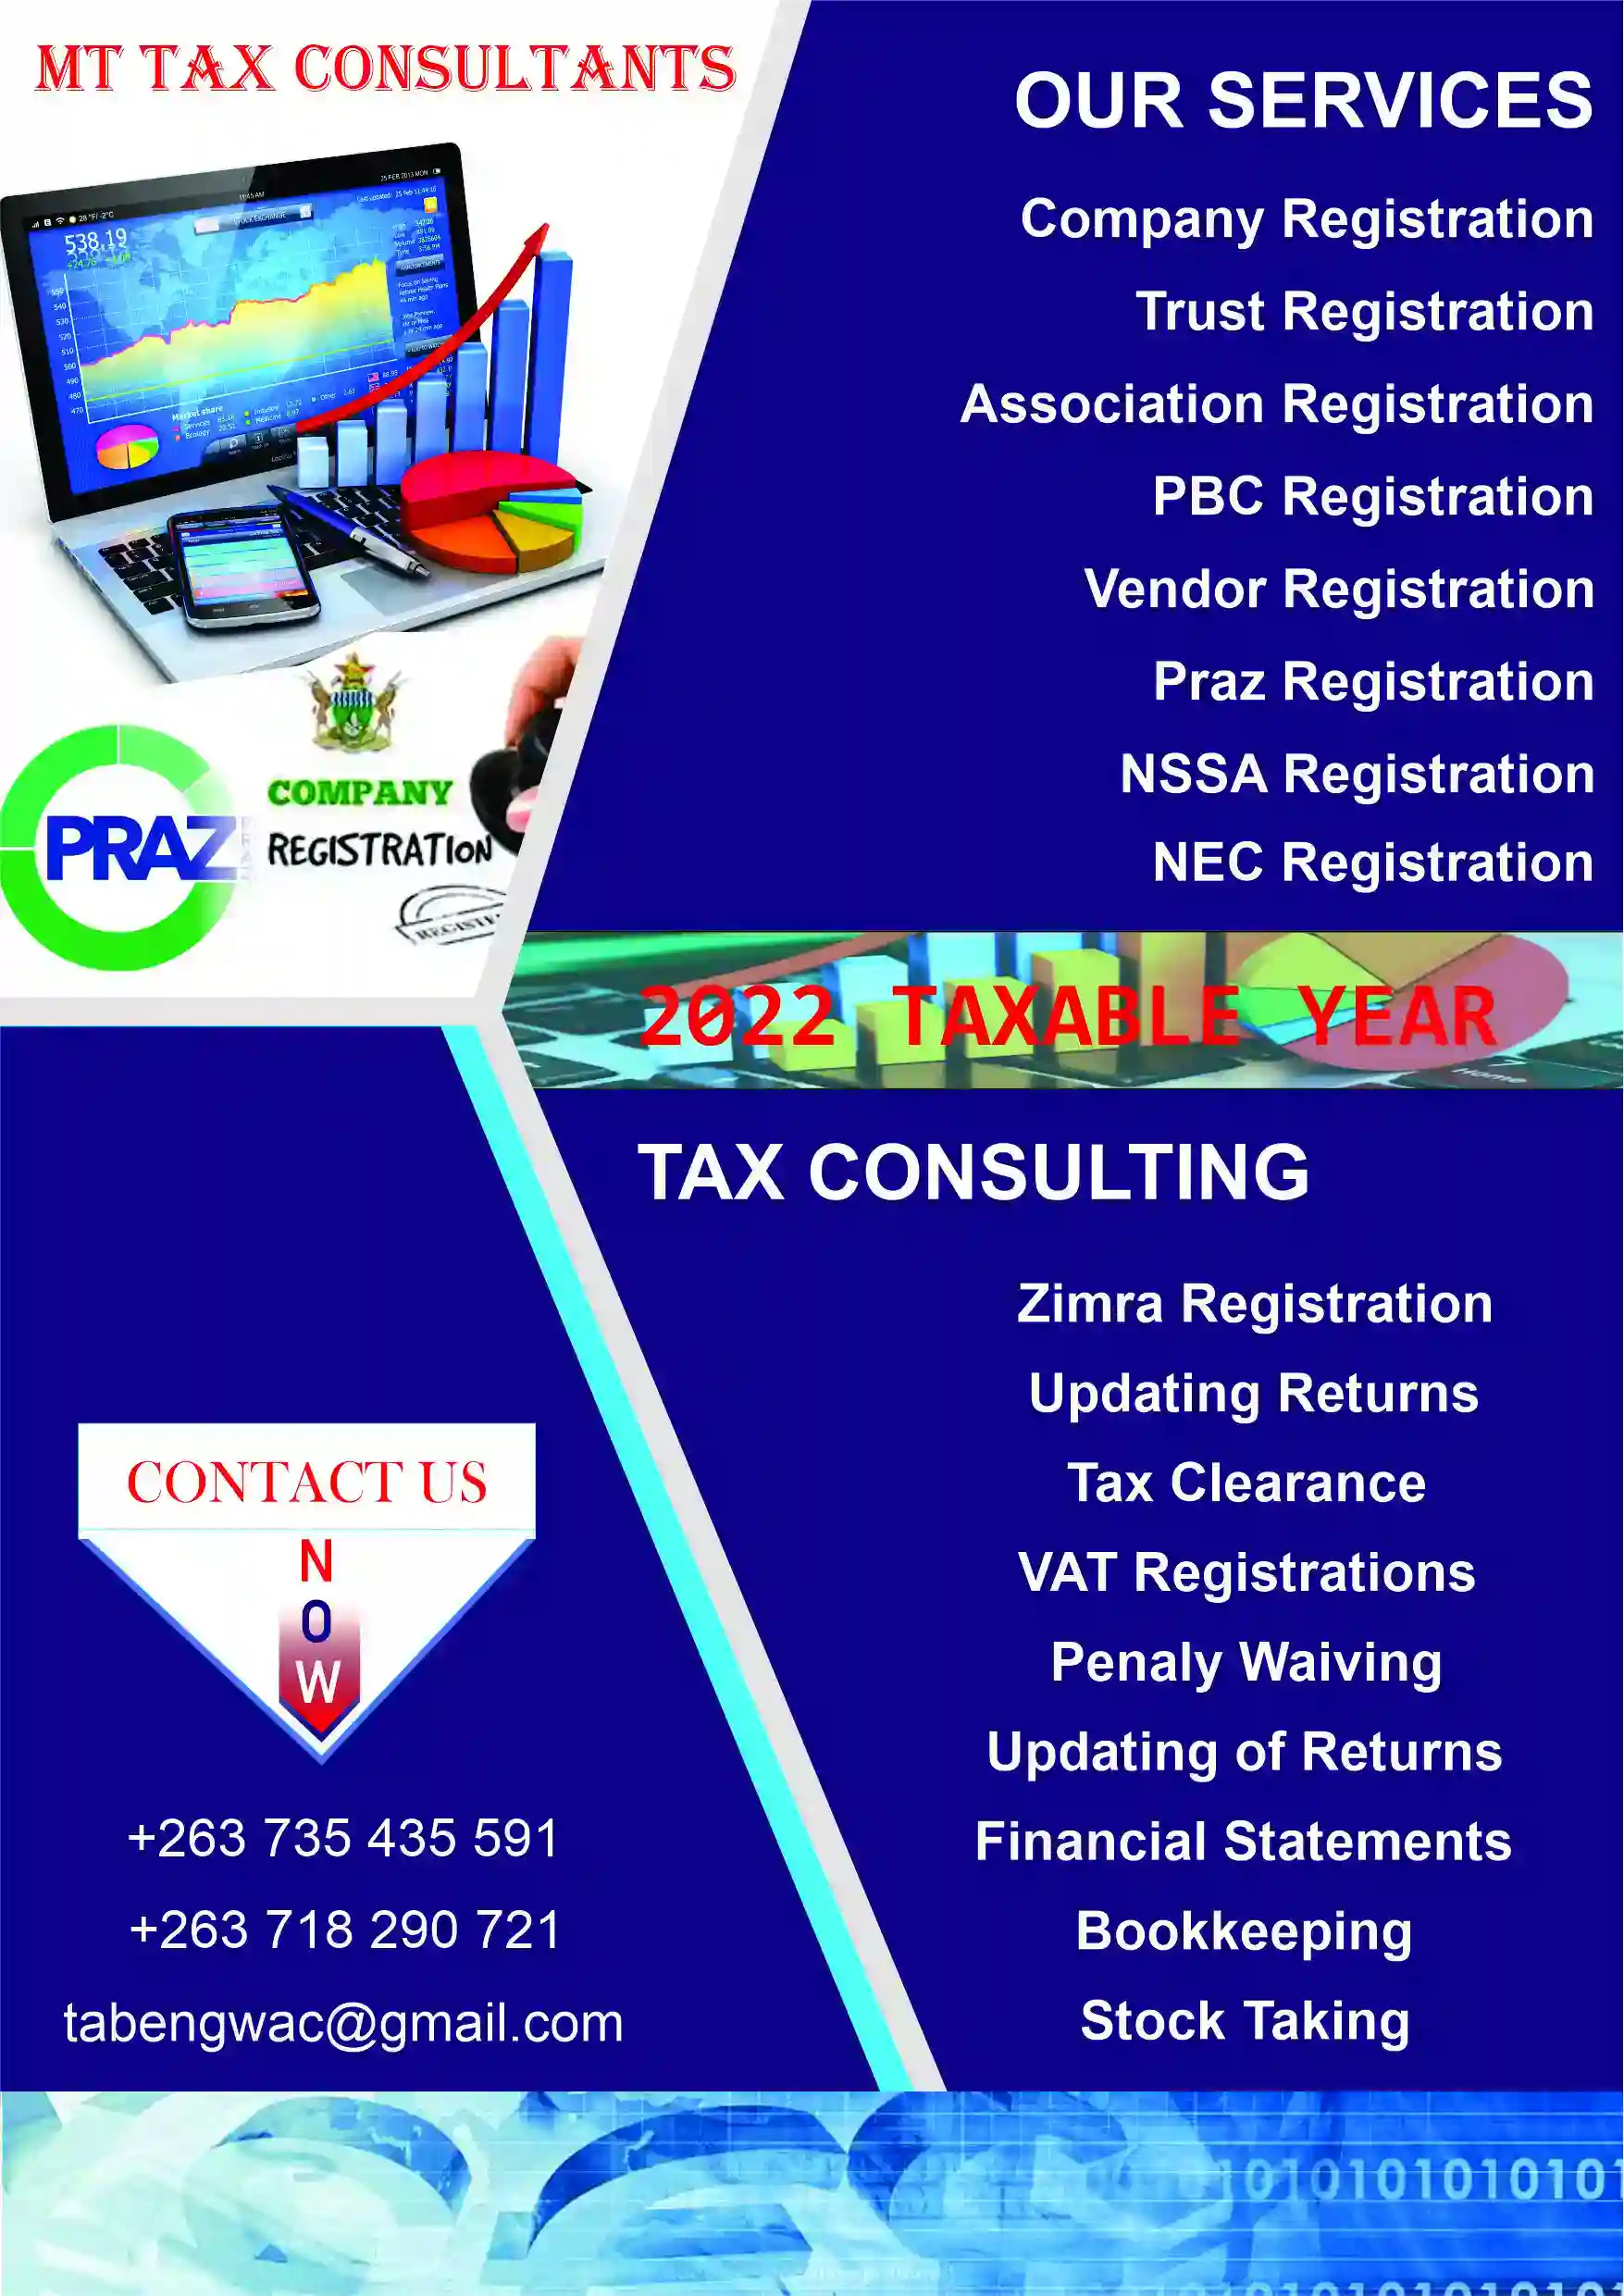 Company Registrations 